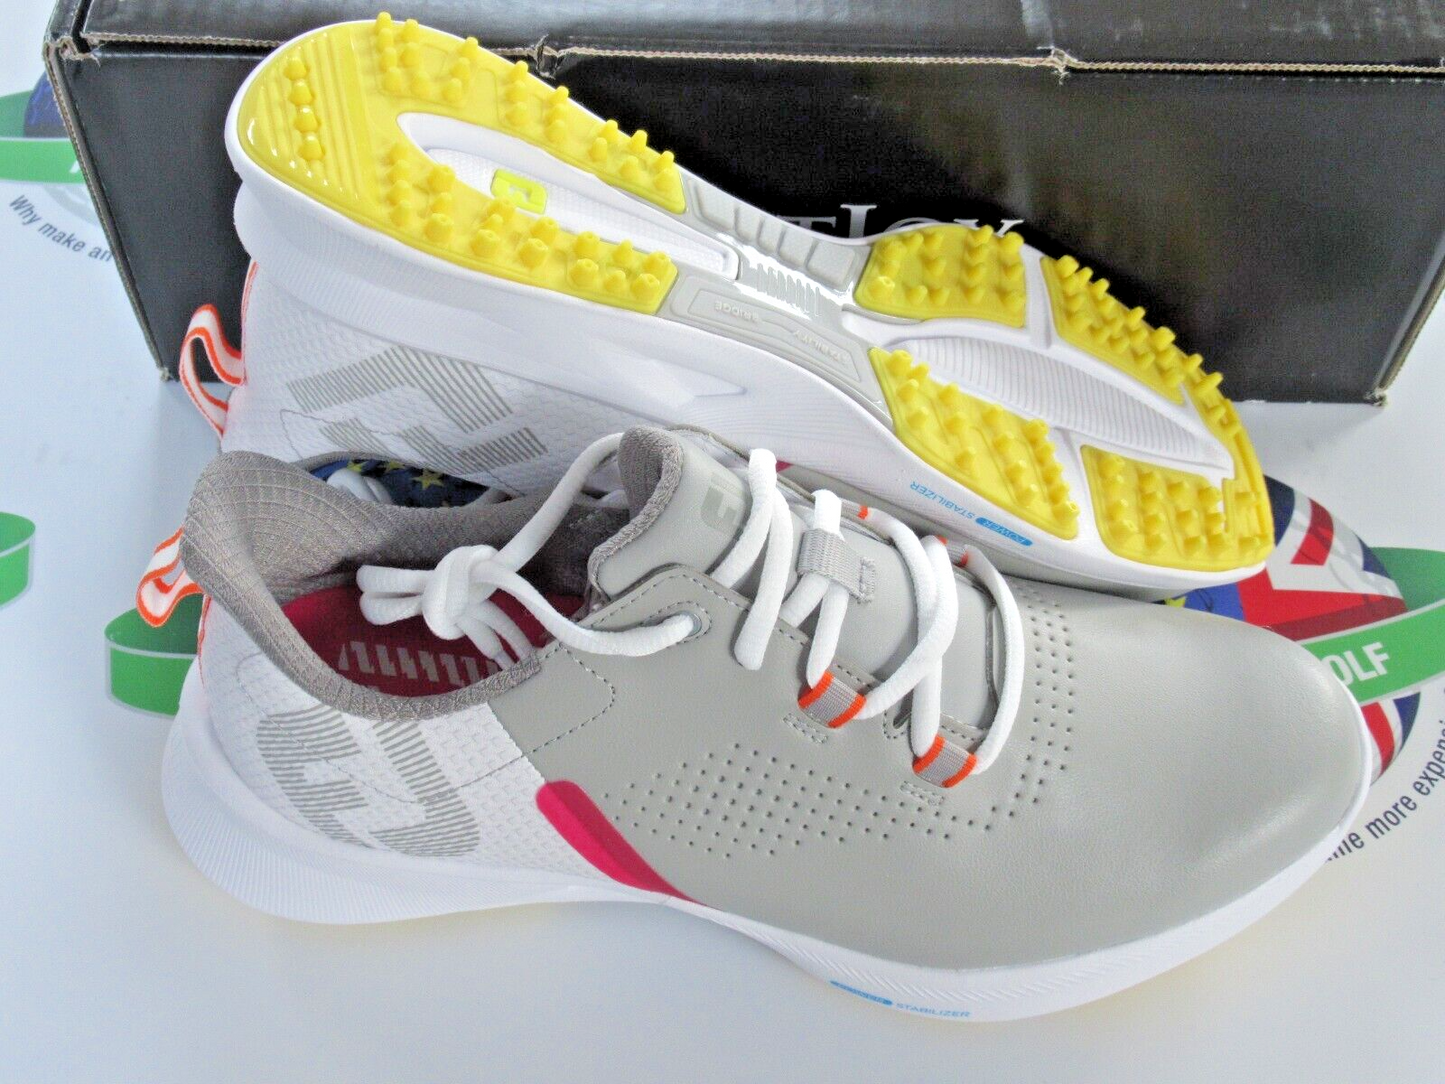 footjoy fuel womens golf shoes grey/white 92372k uk size 4.5 medium